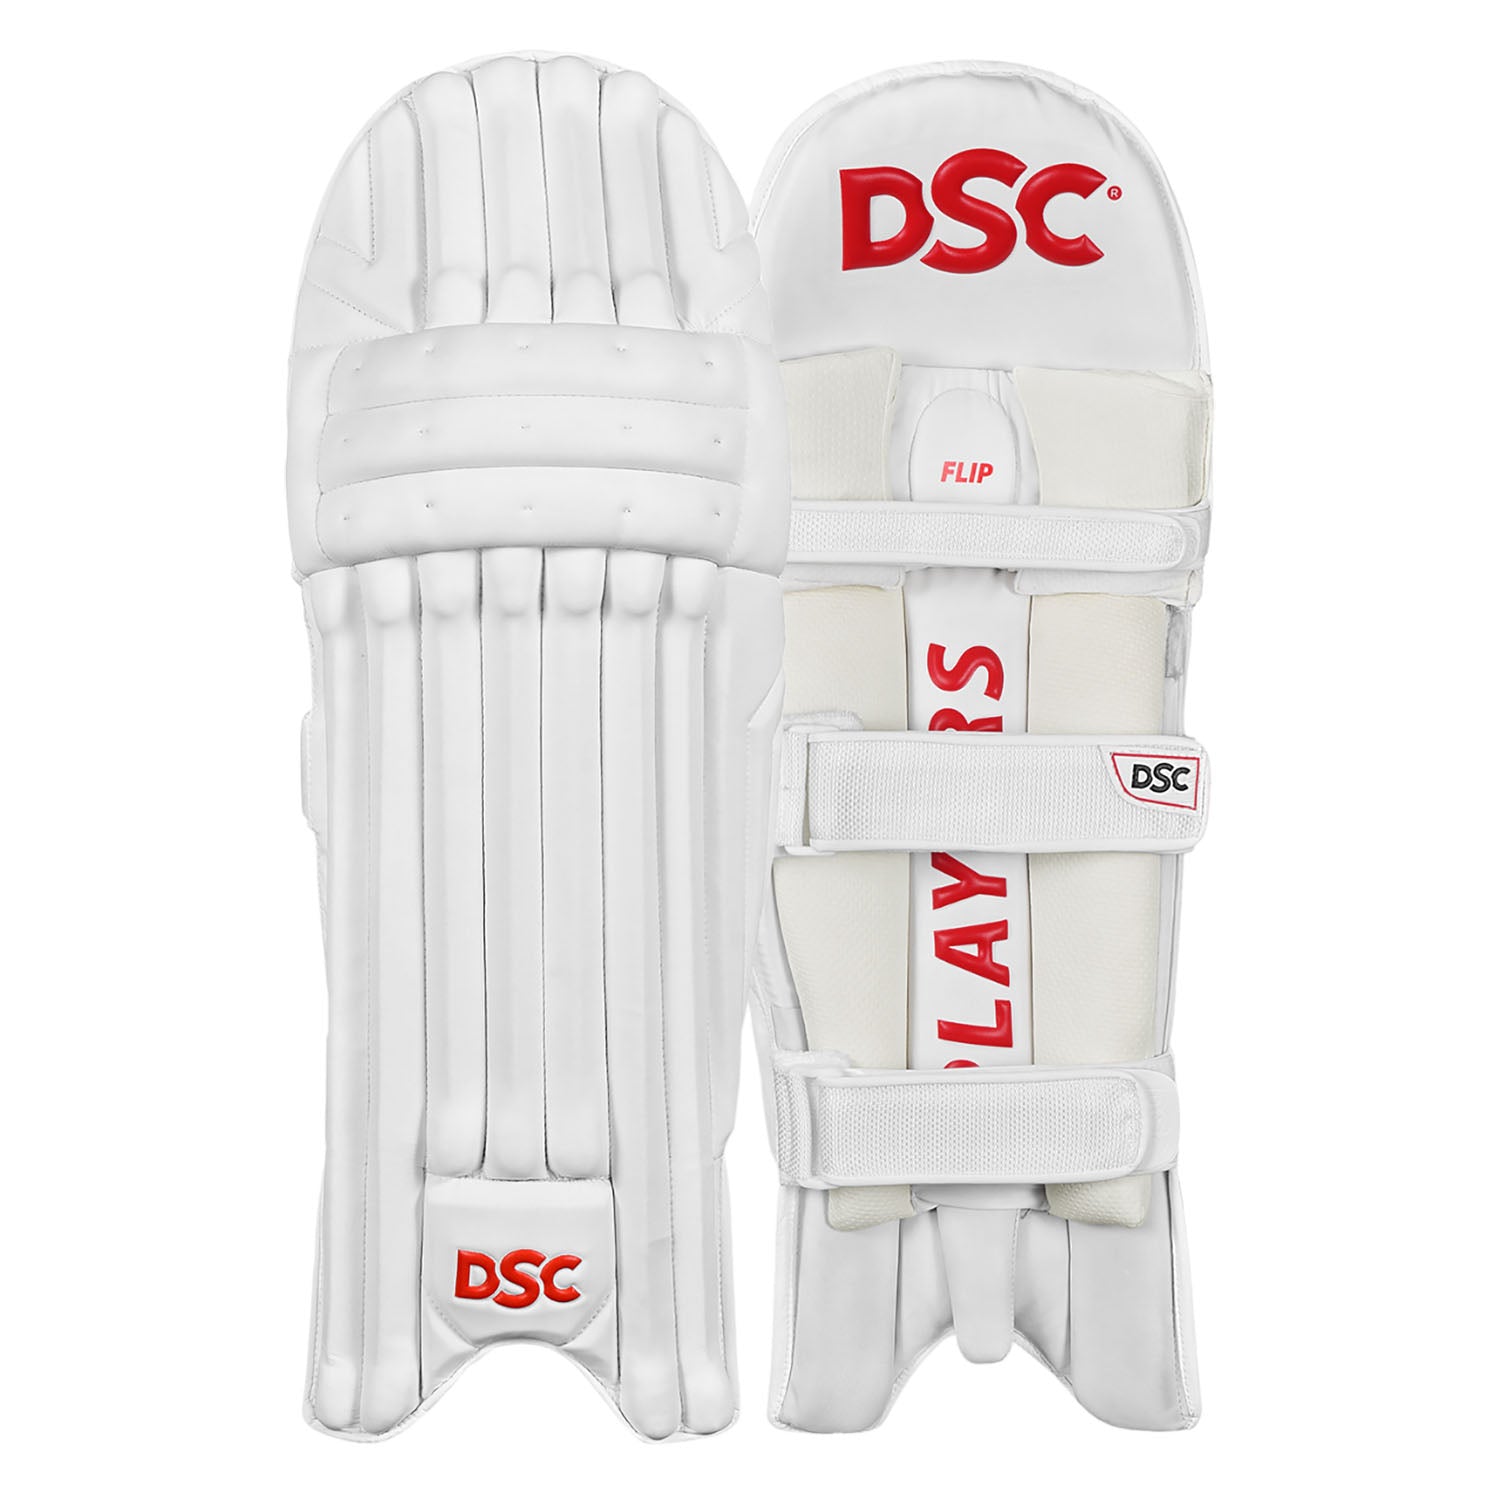 DSC Flip 100 Cricket Batting Pad from Stagsport online cricket Store